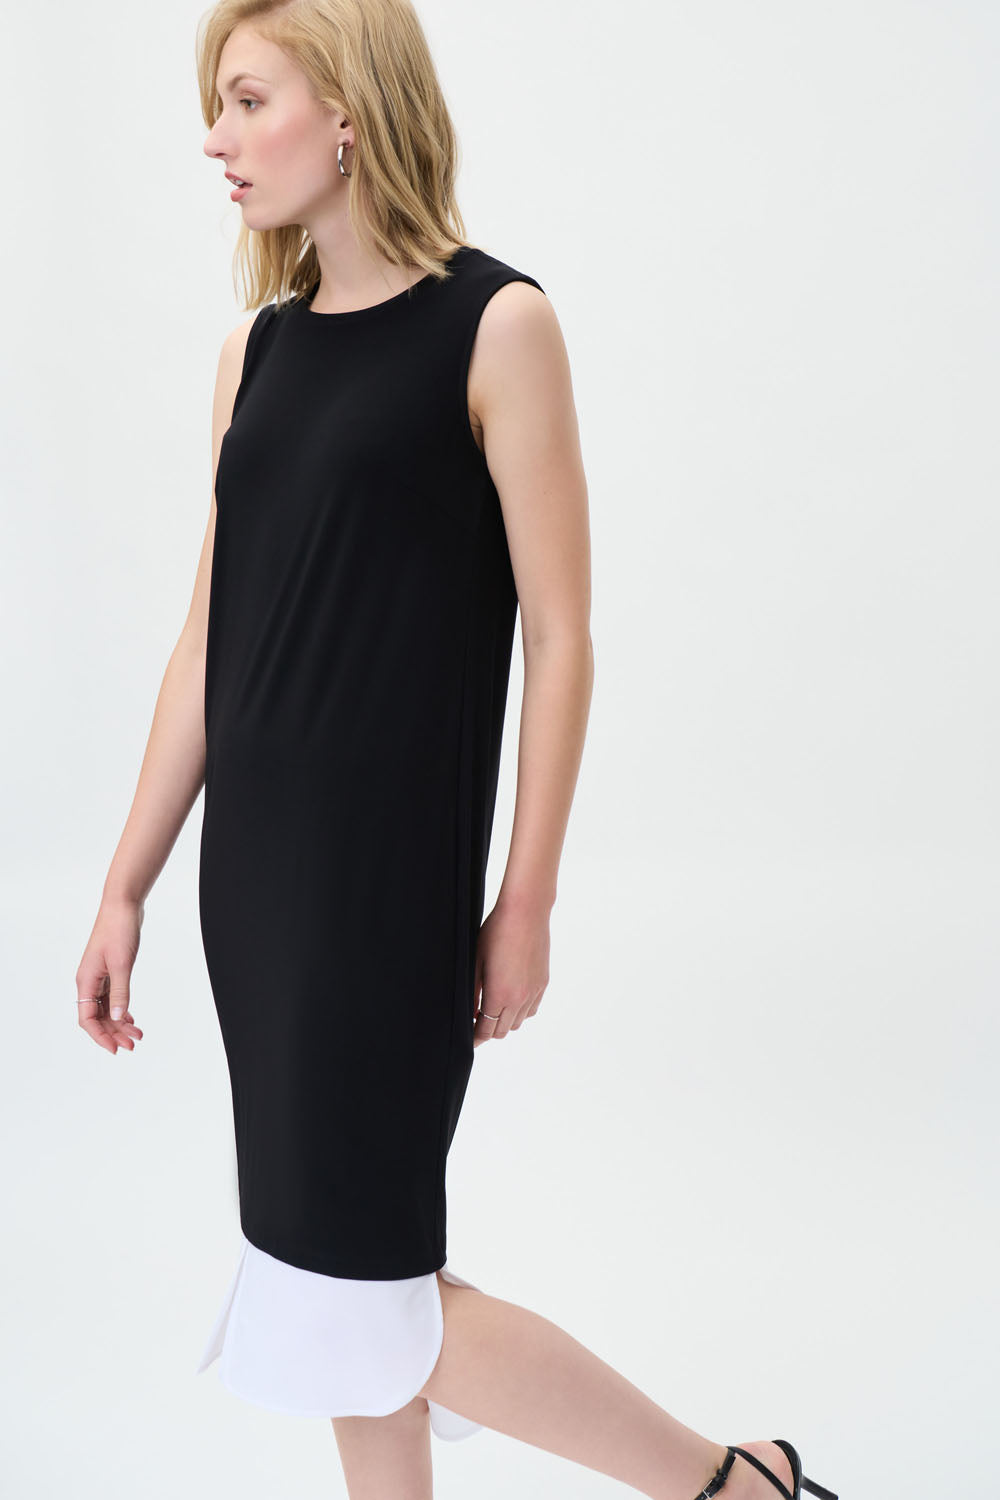 Joseph Ribkoff Black-Optic White Dress Style 231114